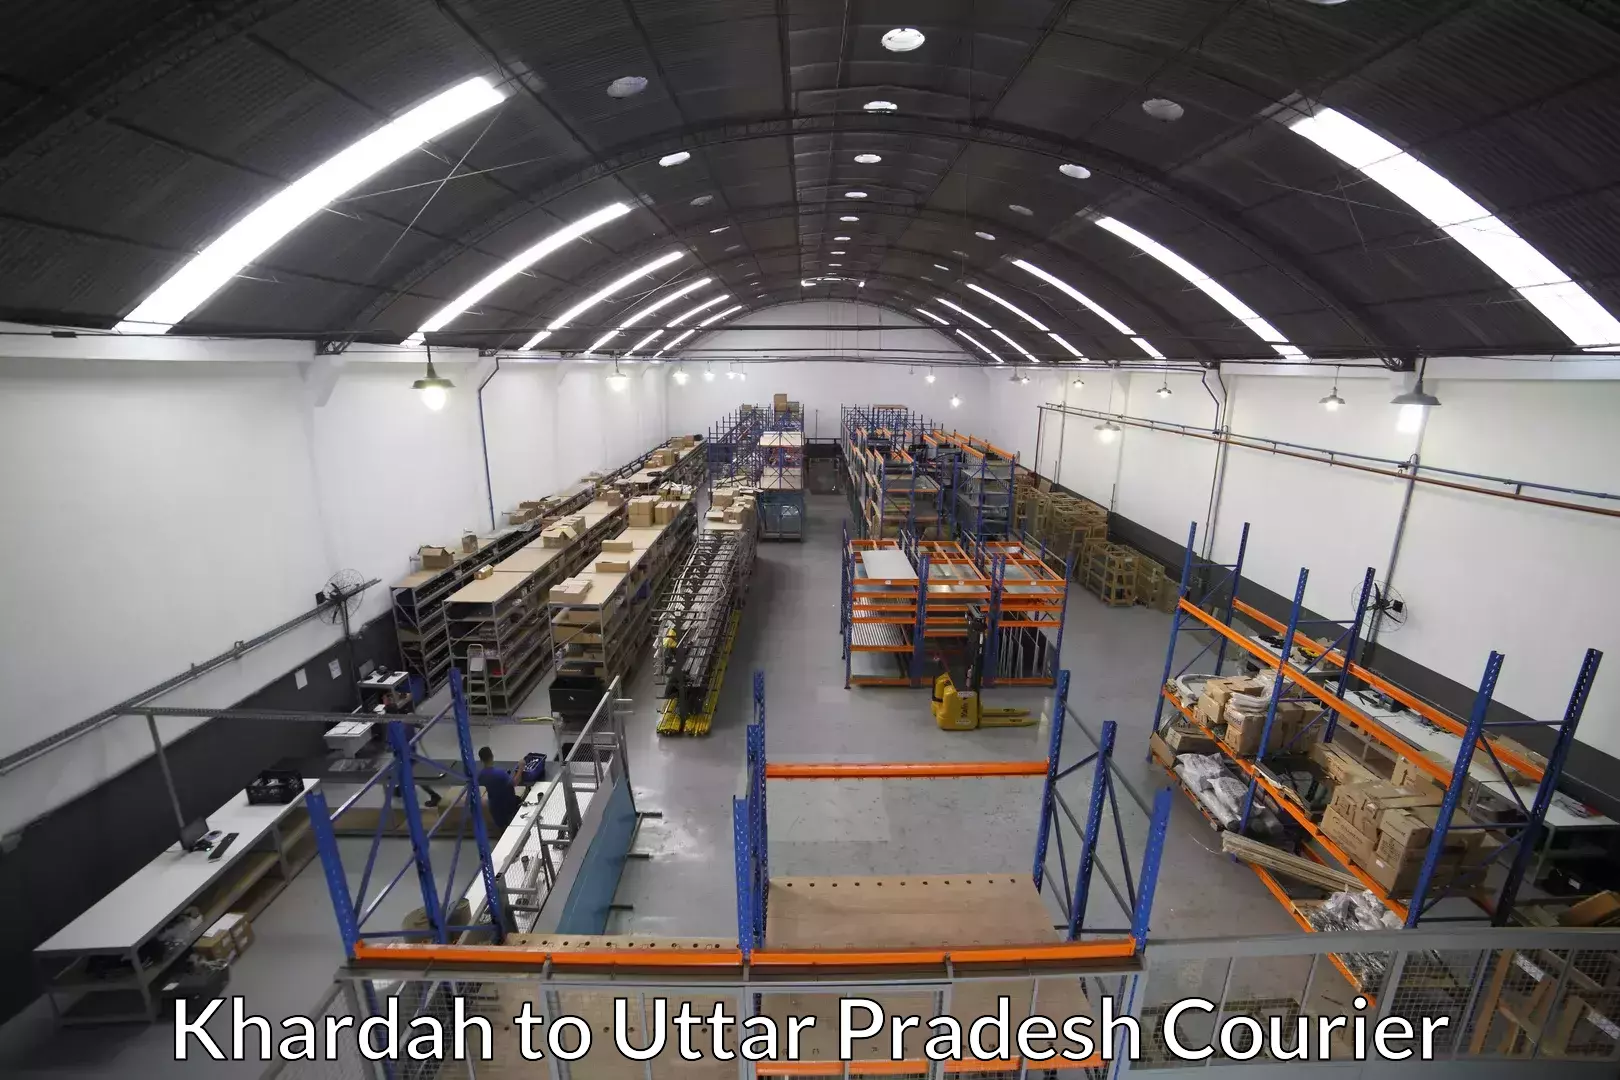 Professional moving company Khardah to Aligarh Muslim University